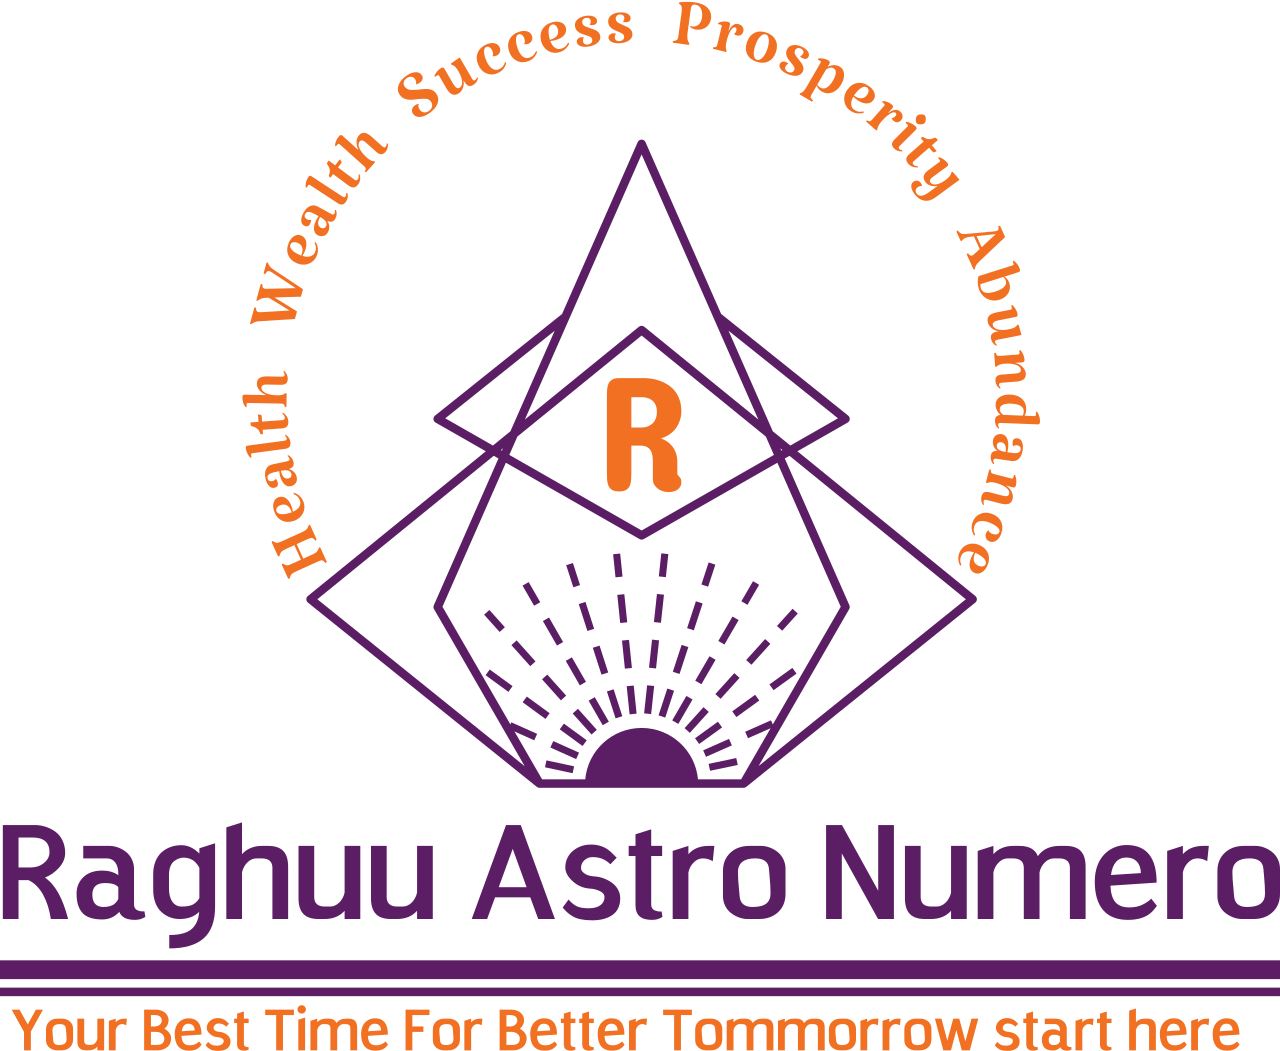 Raghuu Astro Numero's logo